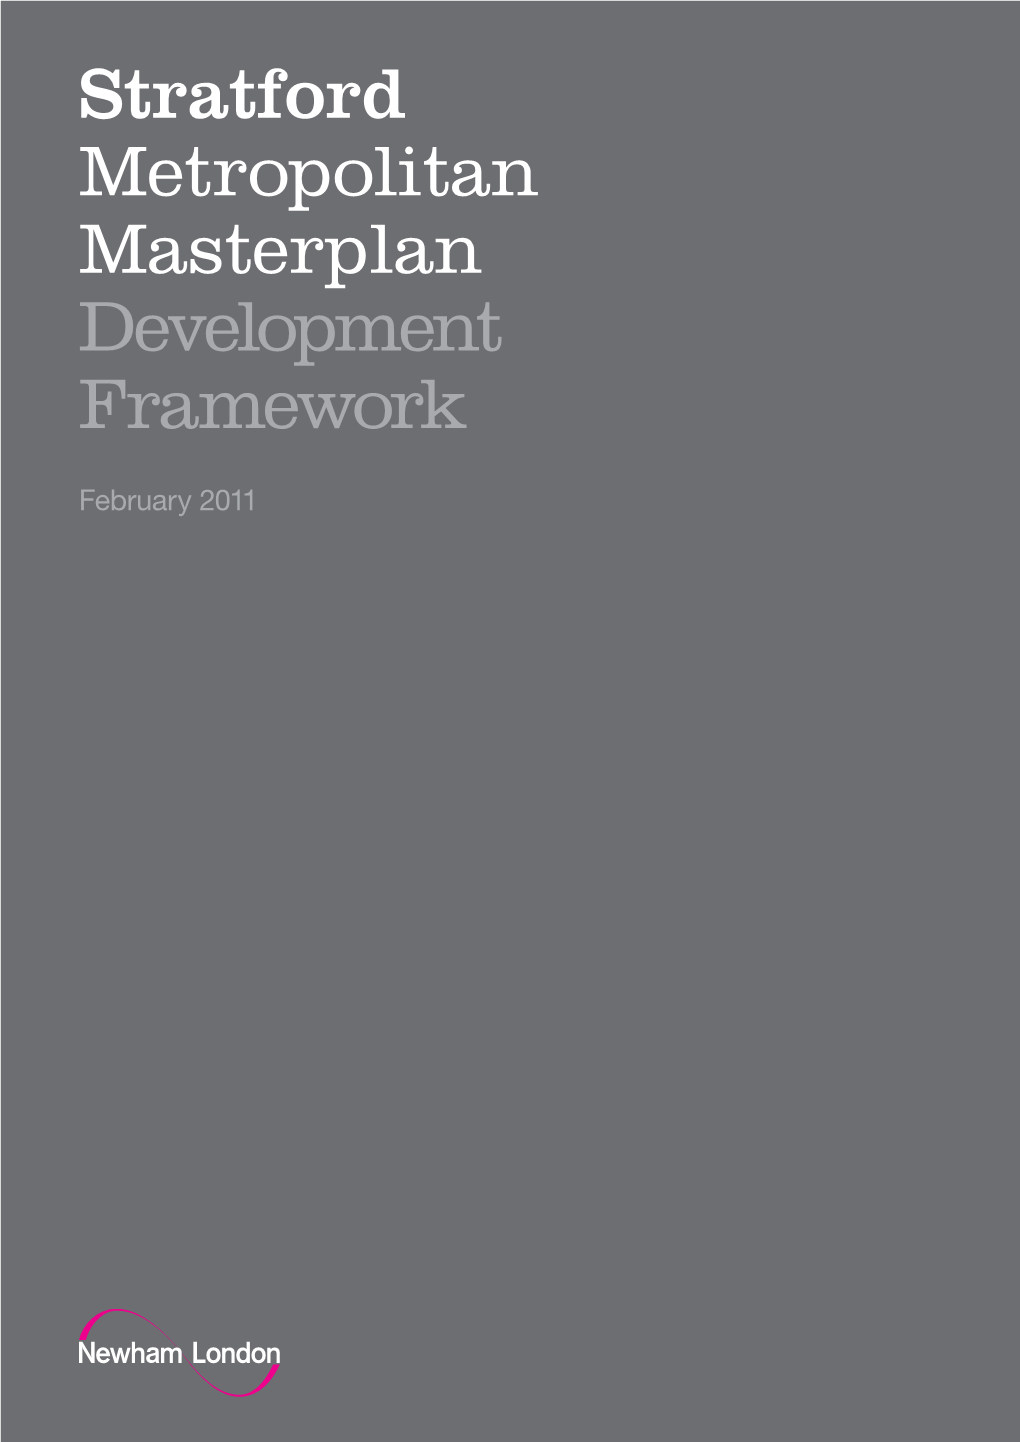 Stratford Metropolitan Masterplan Development Framework